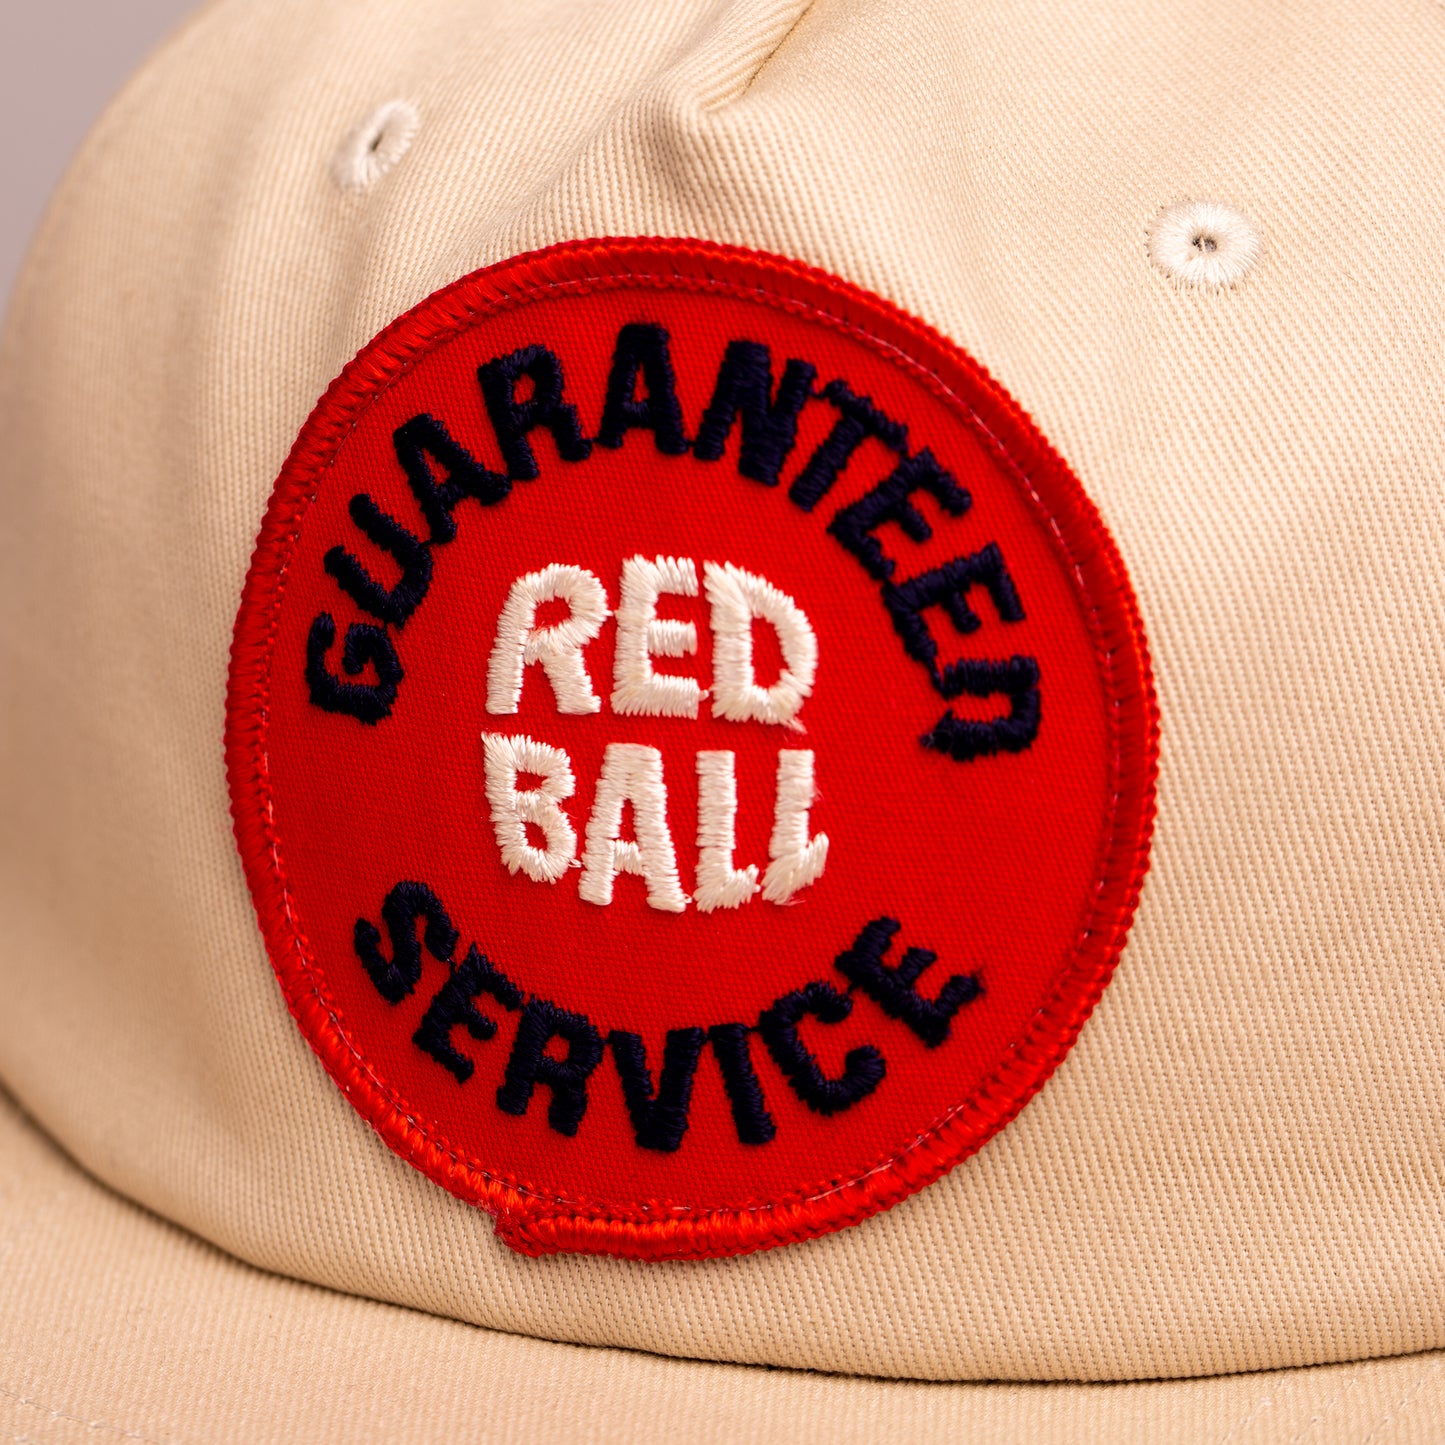 Guaranteed Red Ball Service